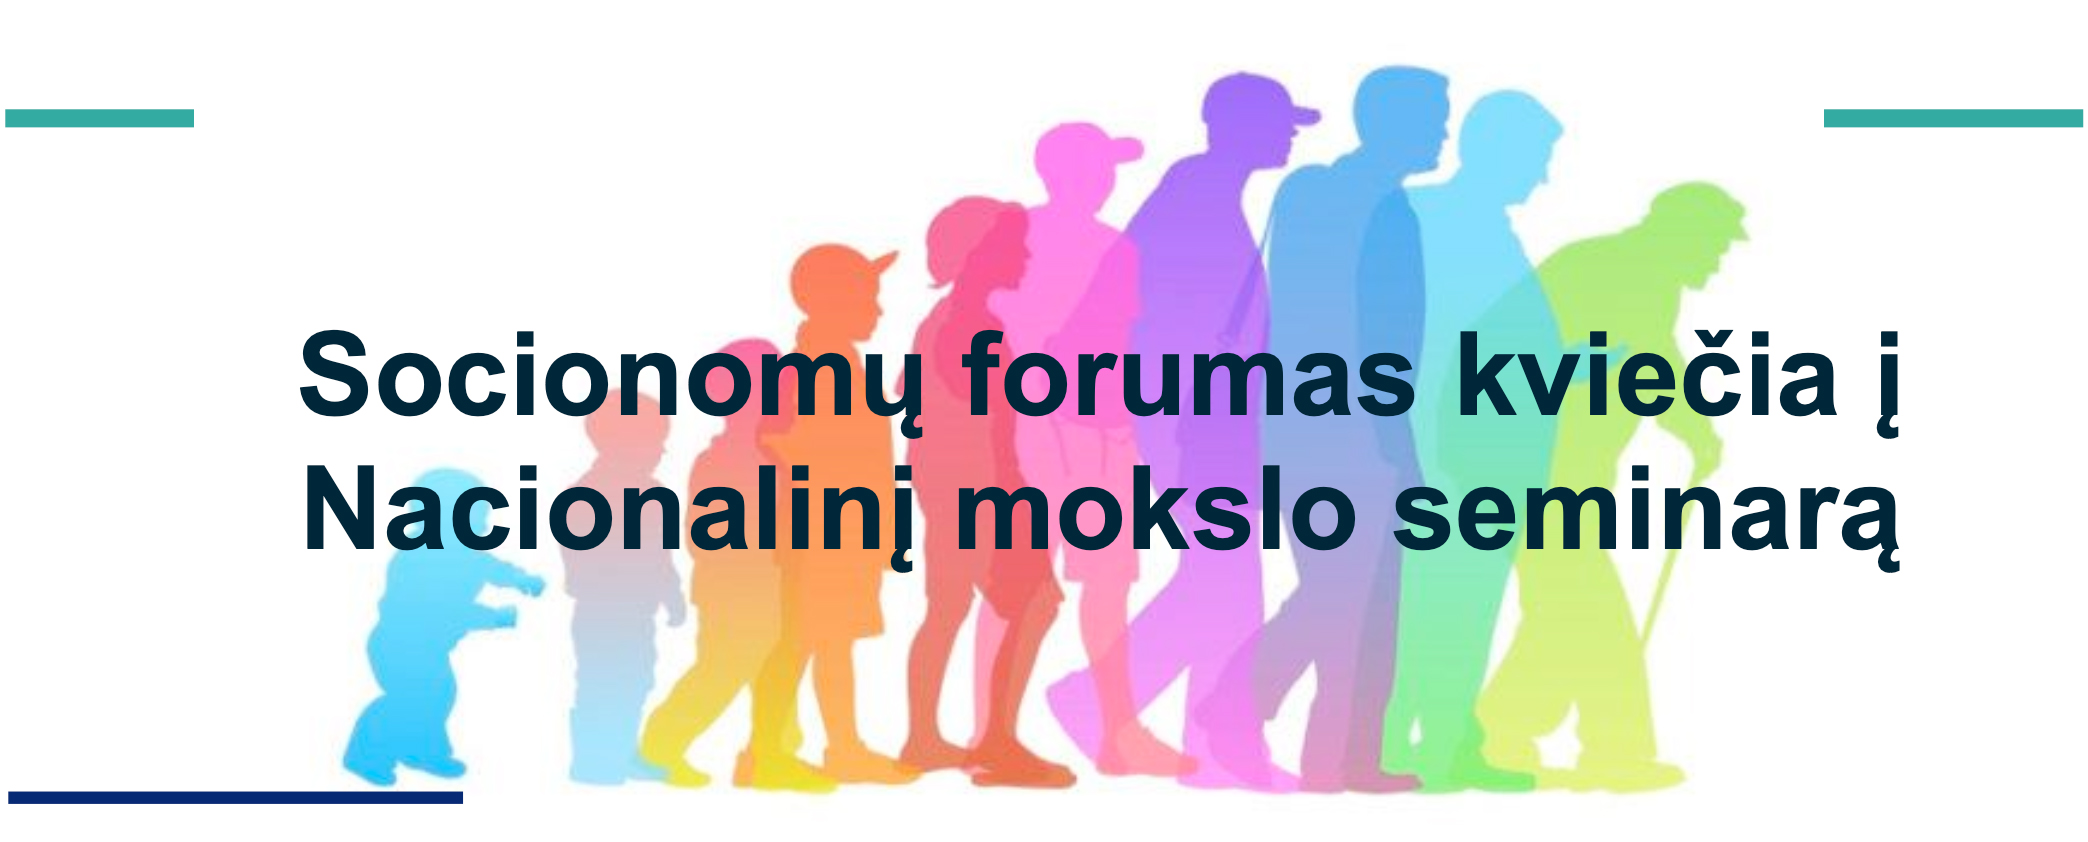 Soc. forumas 05 30